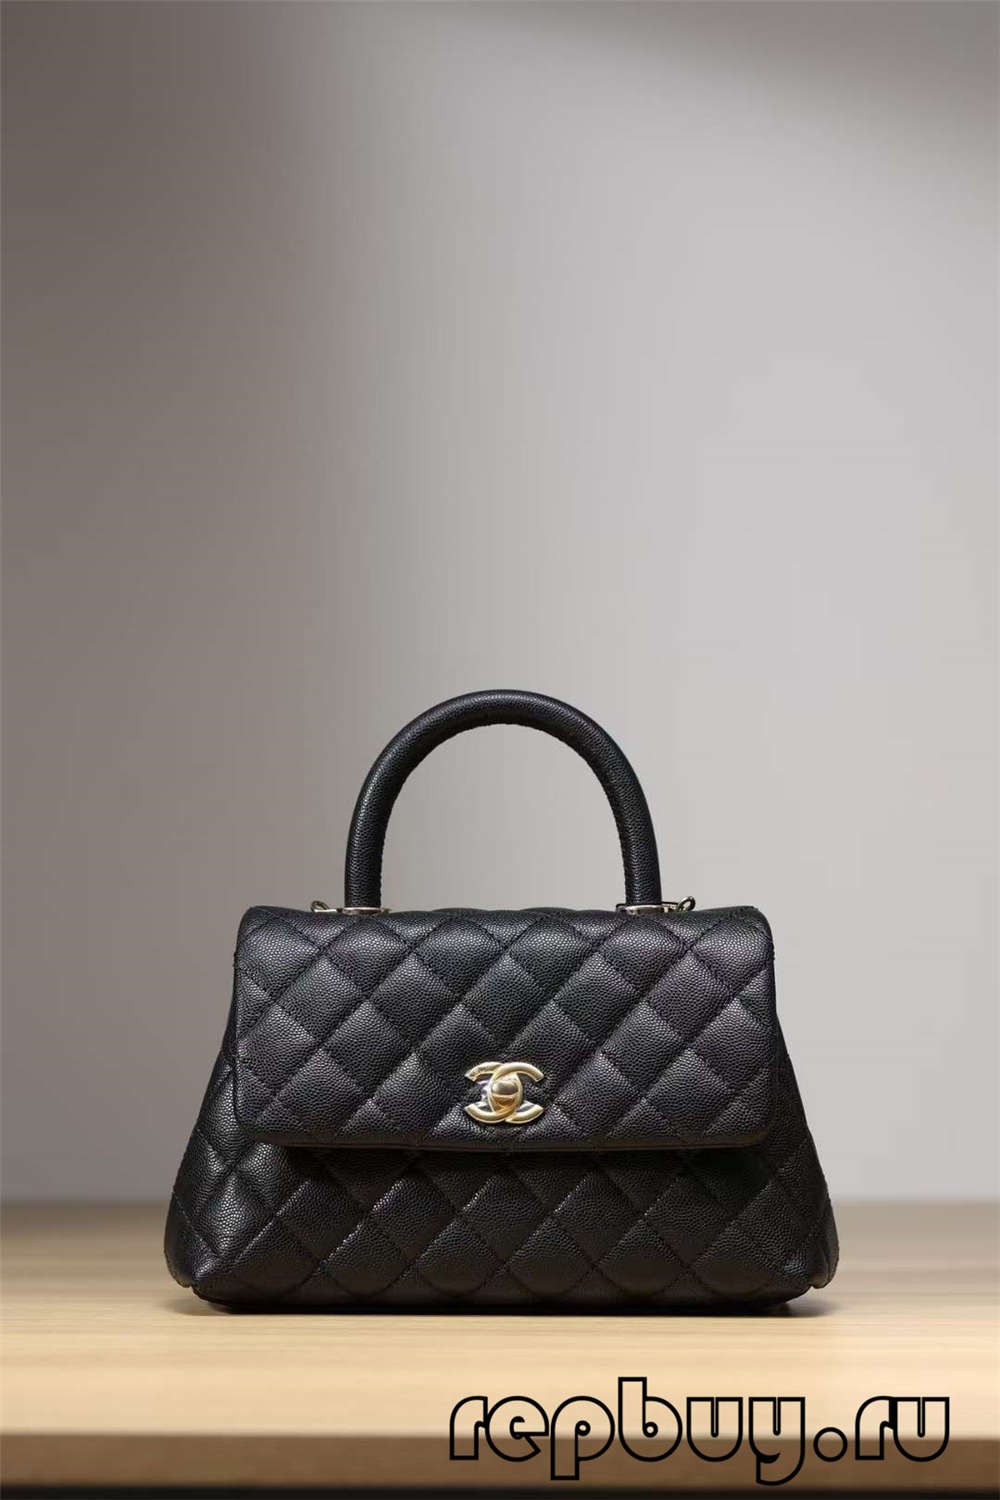 Chanel Coco Handle Top Replica Handbag Black Gold Buckle Look (päivitetty 2022) - Paras laatu Fake Louis Vuitton Bag Verkkokauppa, Replica Design Bag ru